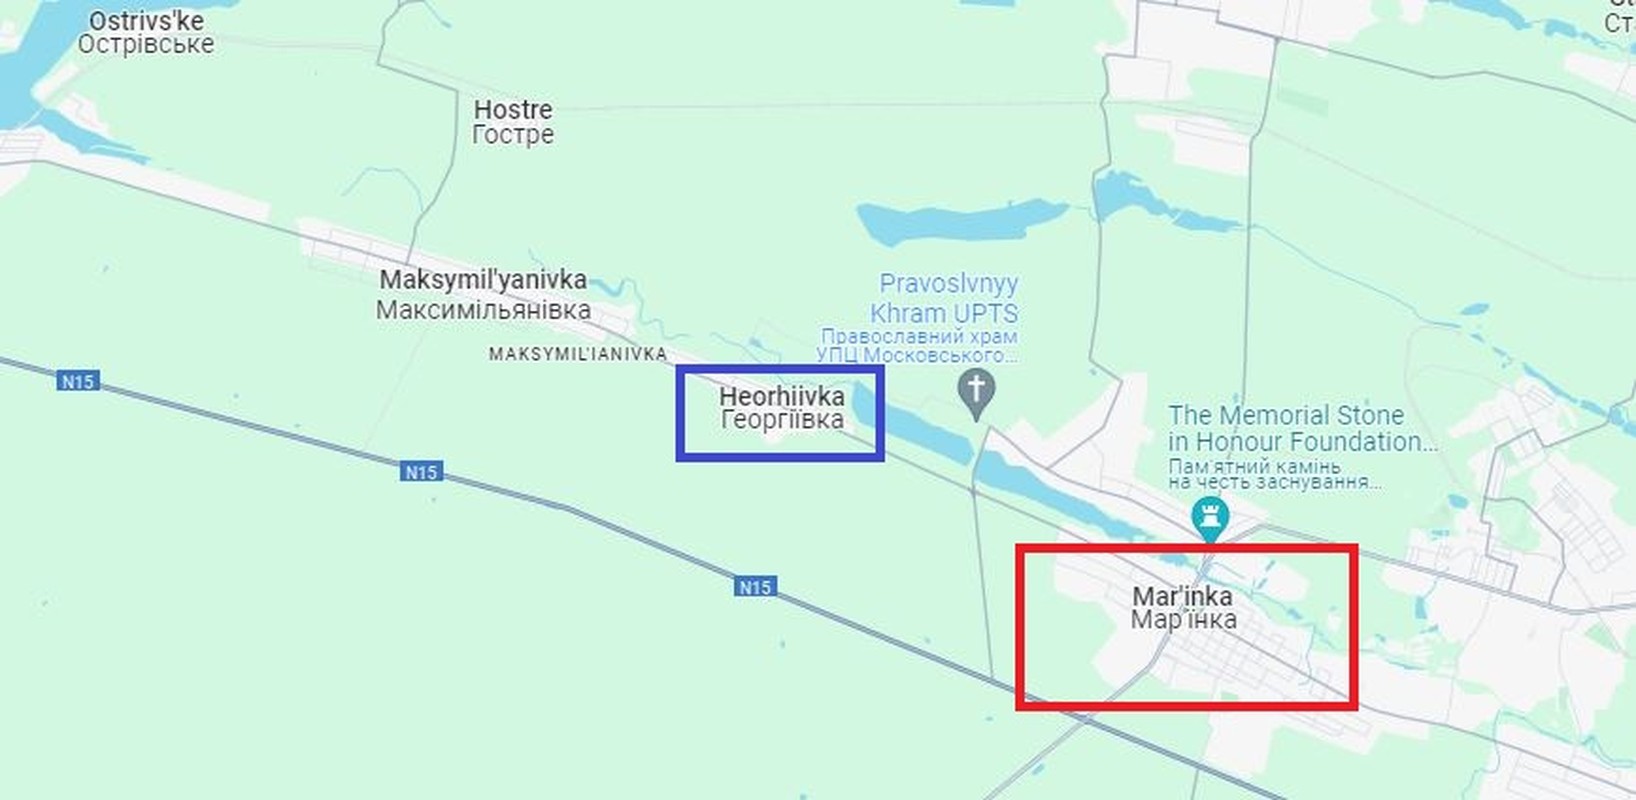 Chien dich Marinka sap ket thuc, quan Nga tien thang vao trung tam Avdiivka-Hinh-11